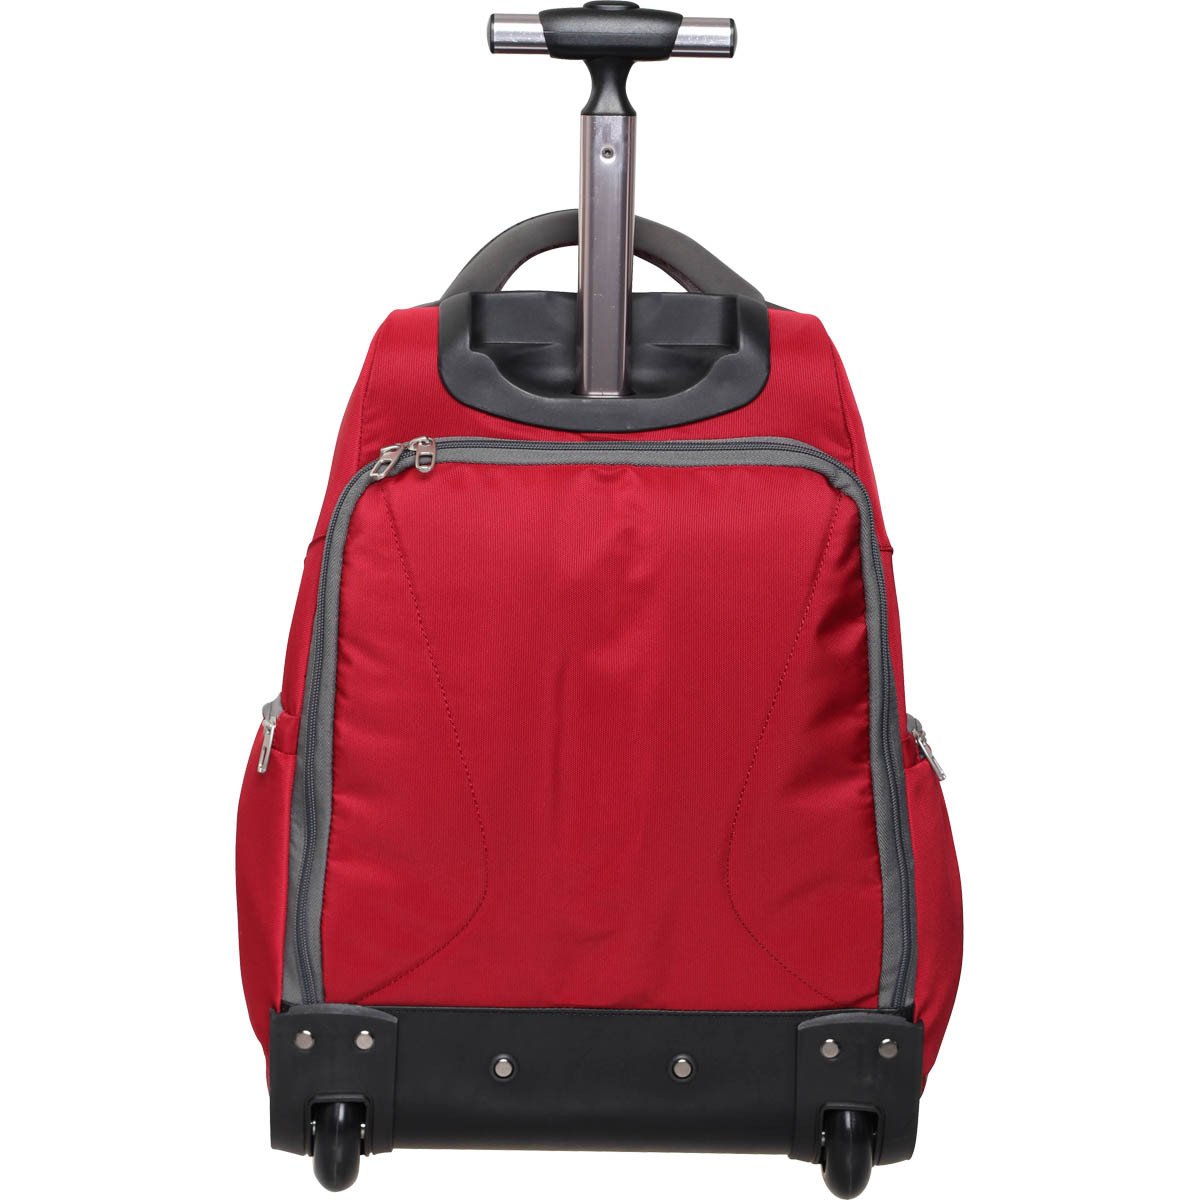 Husqvarna® Viking® Small Roller Bag | Husqvarna® Viking®